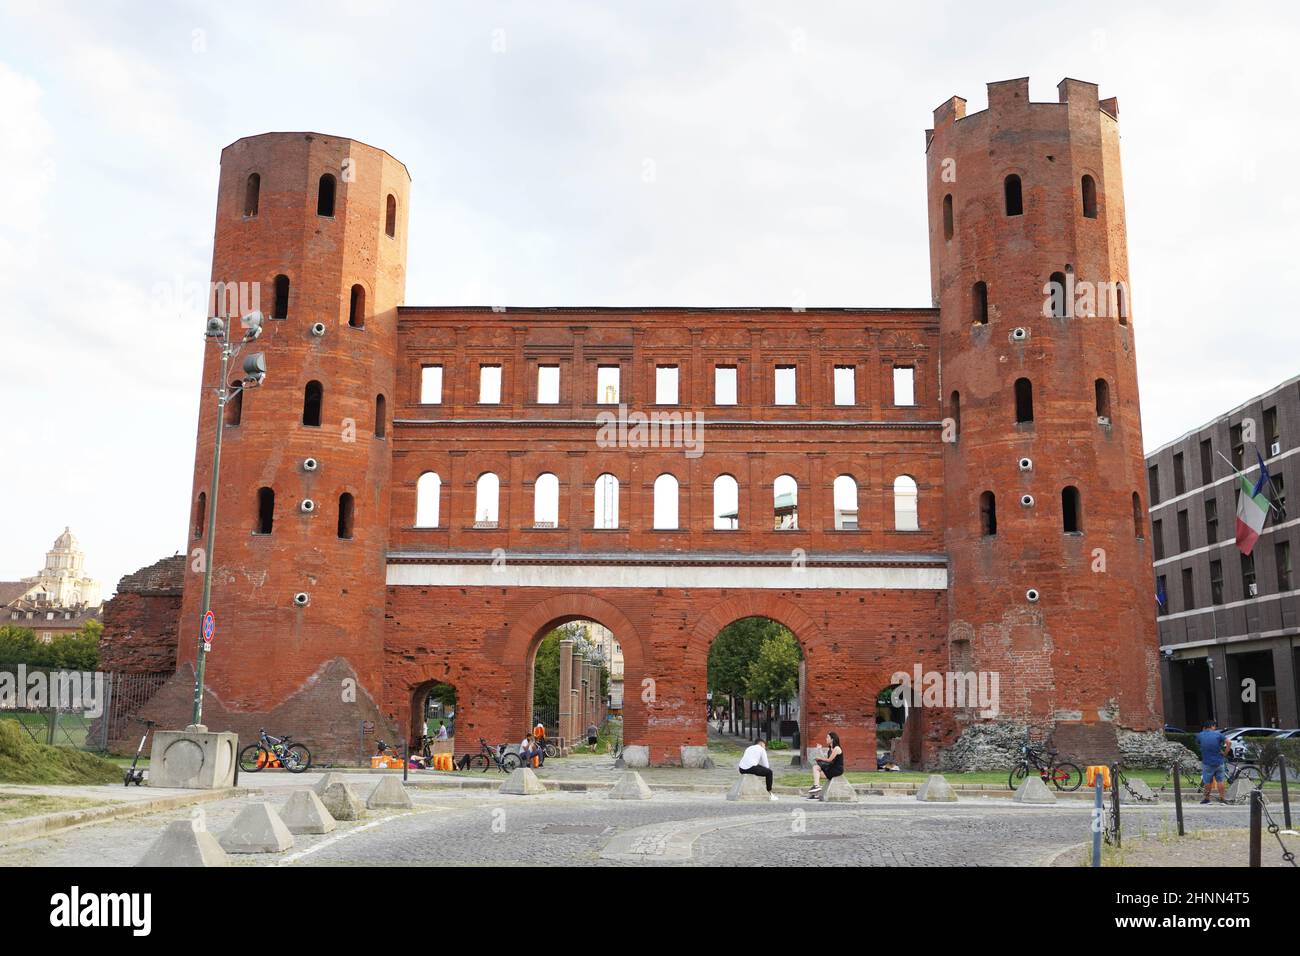 Palatine Gate in Turin, Italy Stock Photo